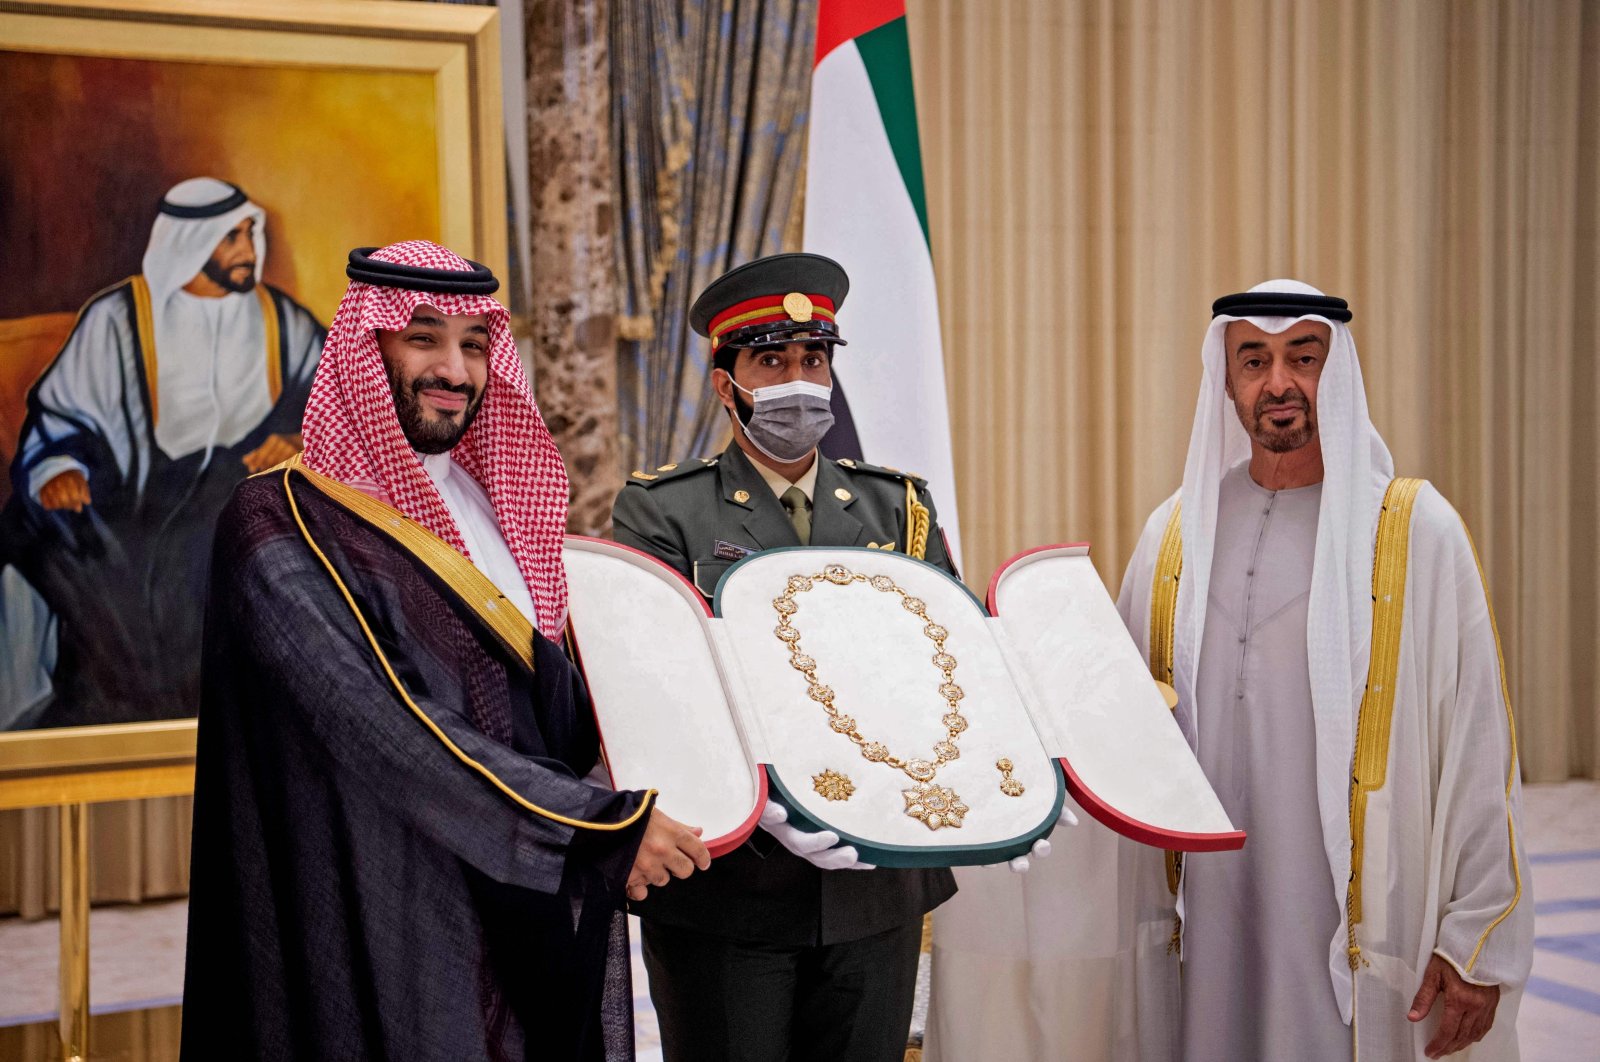 Abu Dhabi&#039;s Crown Prince Mohammed bin Zayed Al Nahyan (R) honoring Saudi Arabia&#039;s Crown Prince Mohammed bin Salman (L) with the Order of Zayed, First Class, in Abu Dhabi, UAE, Dec. 7, 2021. (Saudi Royal Palace via AFP)